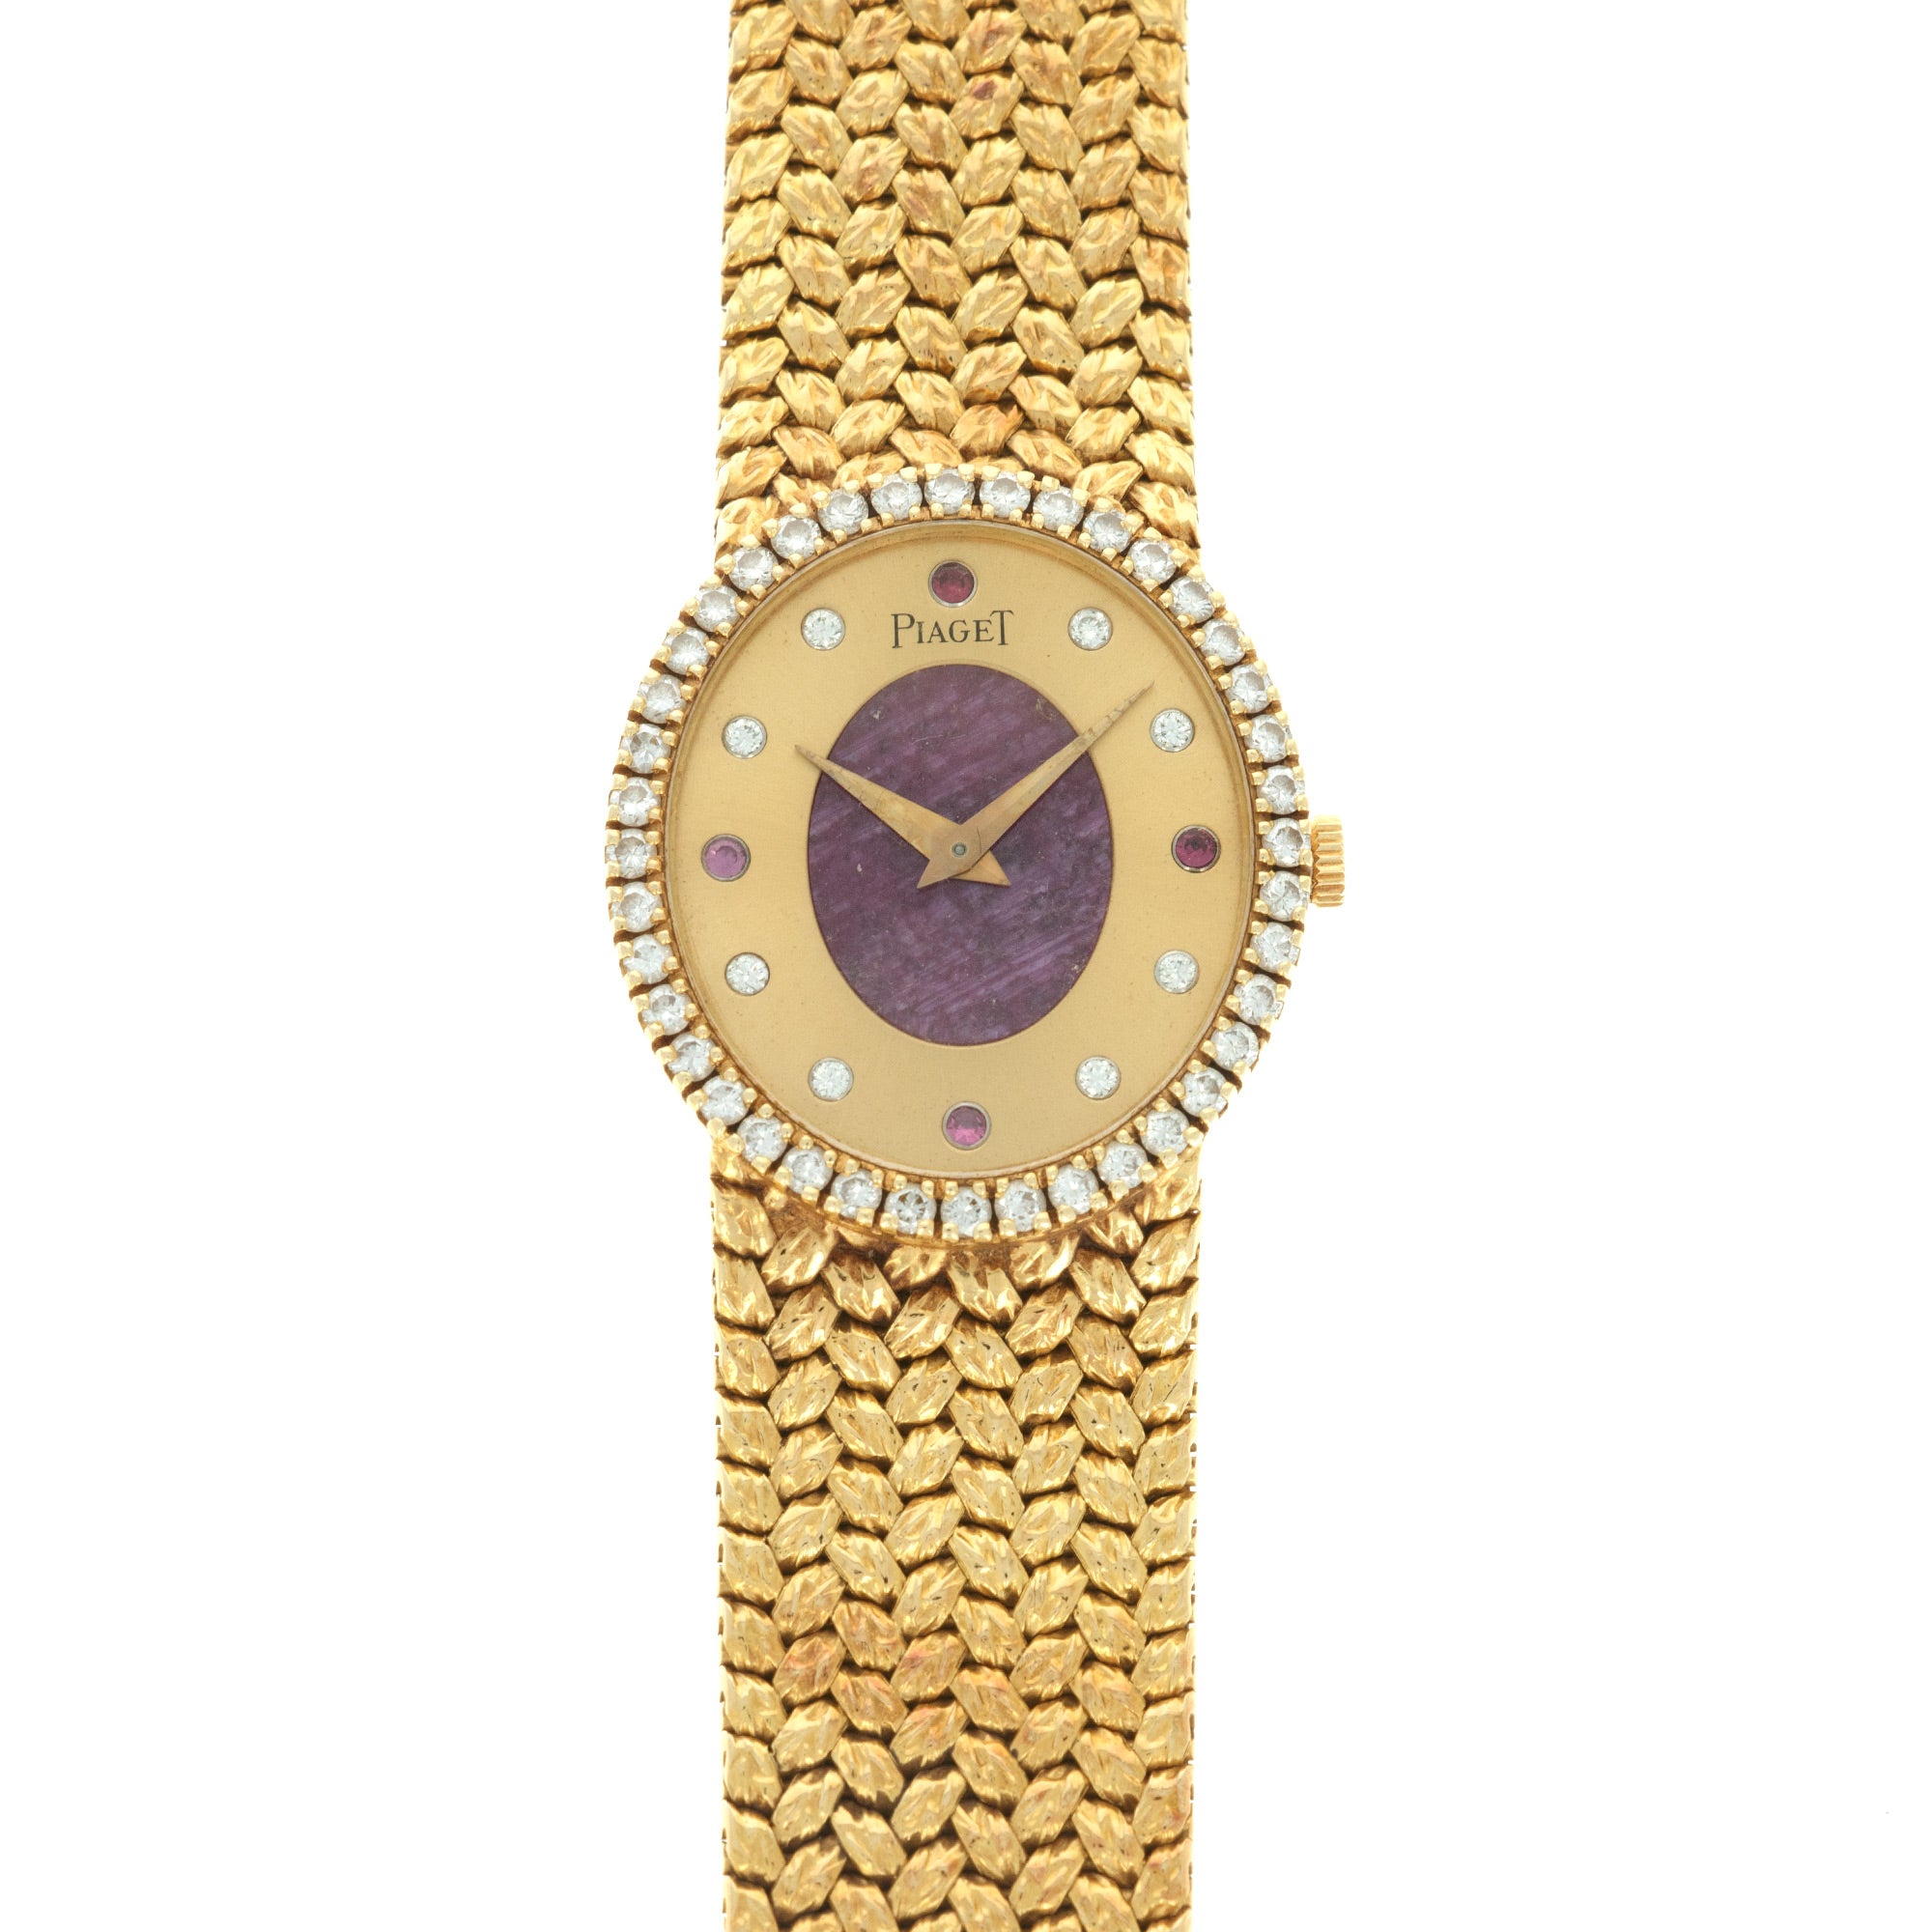 Piaget - Piaget Yellow Gold Ruby Diamond Watch, Circa 1970s - The Keystone Watches